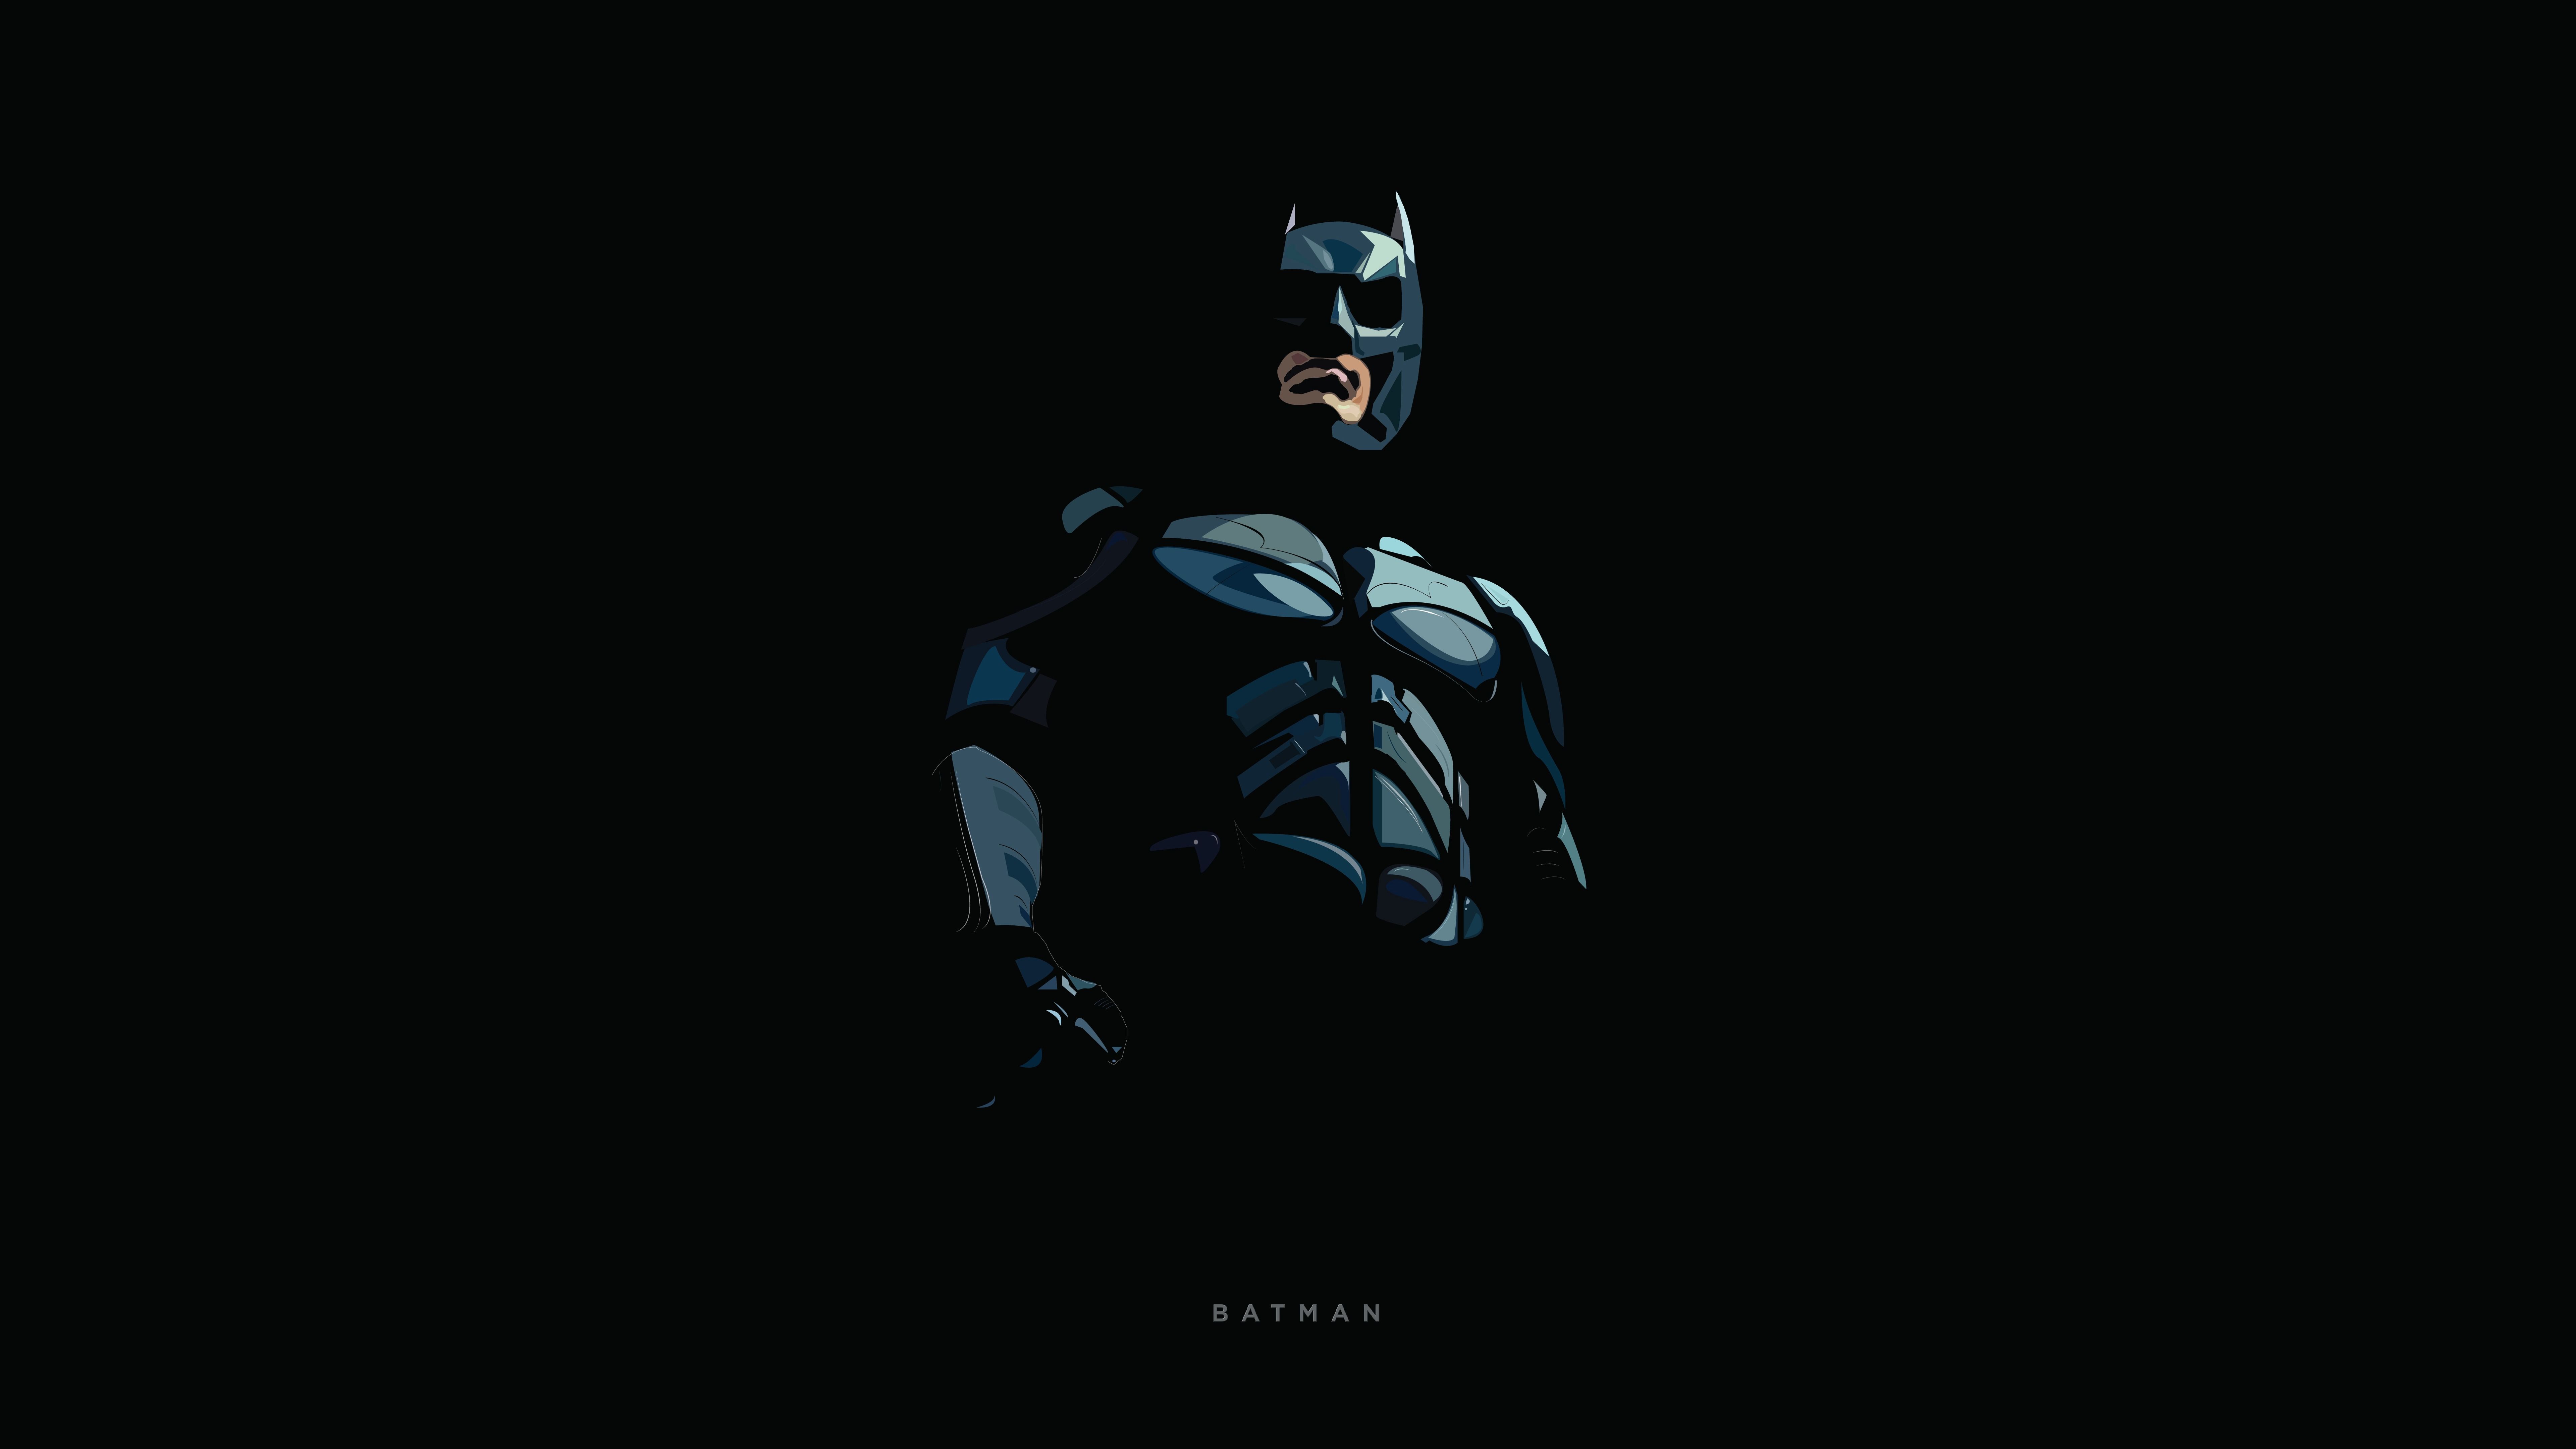 Batman Minimal Illustration Wallpaper, HD Minimalist 4K Wallpaper, Image, Photo and Background